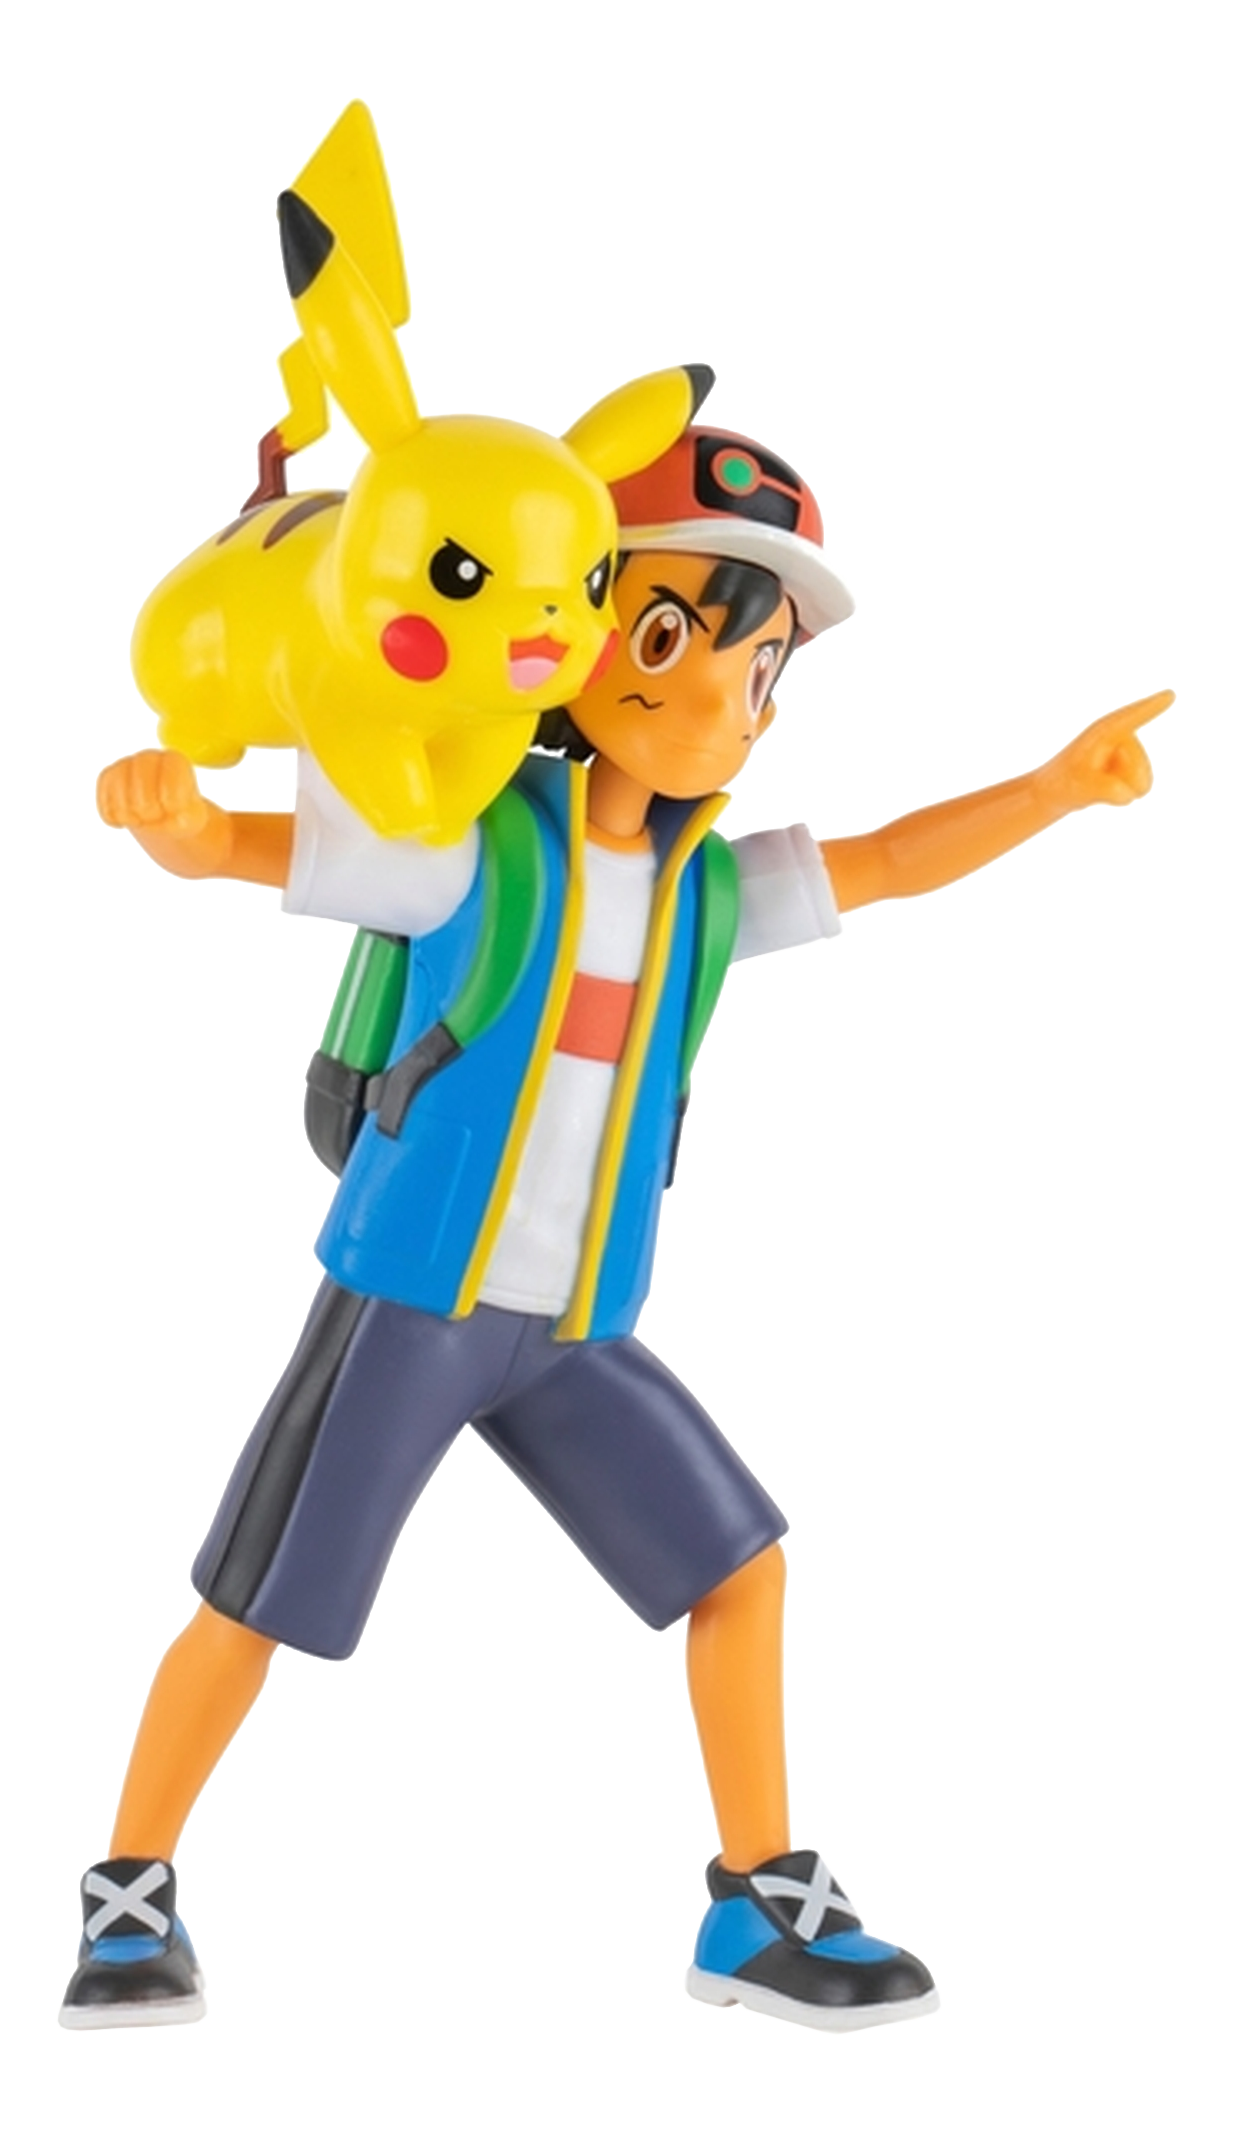 JAZWARES Pokémon: Ash + Pikachu - Battle Feature (10 cm) - Sammelfigur (Mehrfarbig)